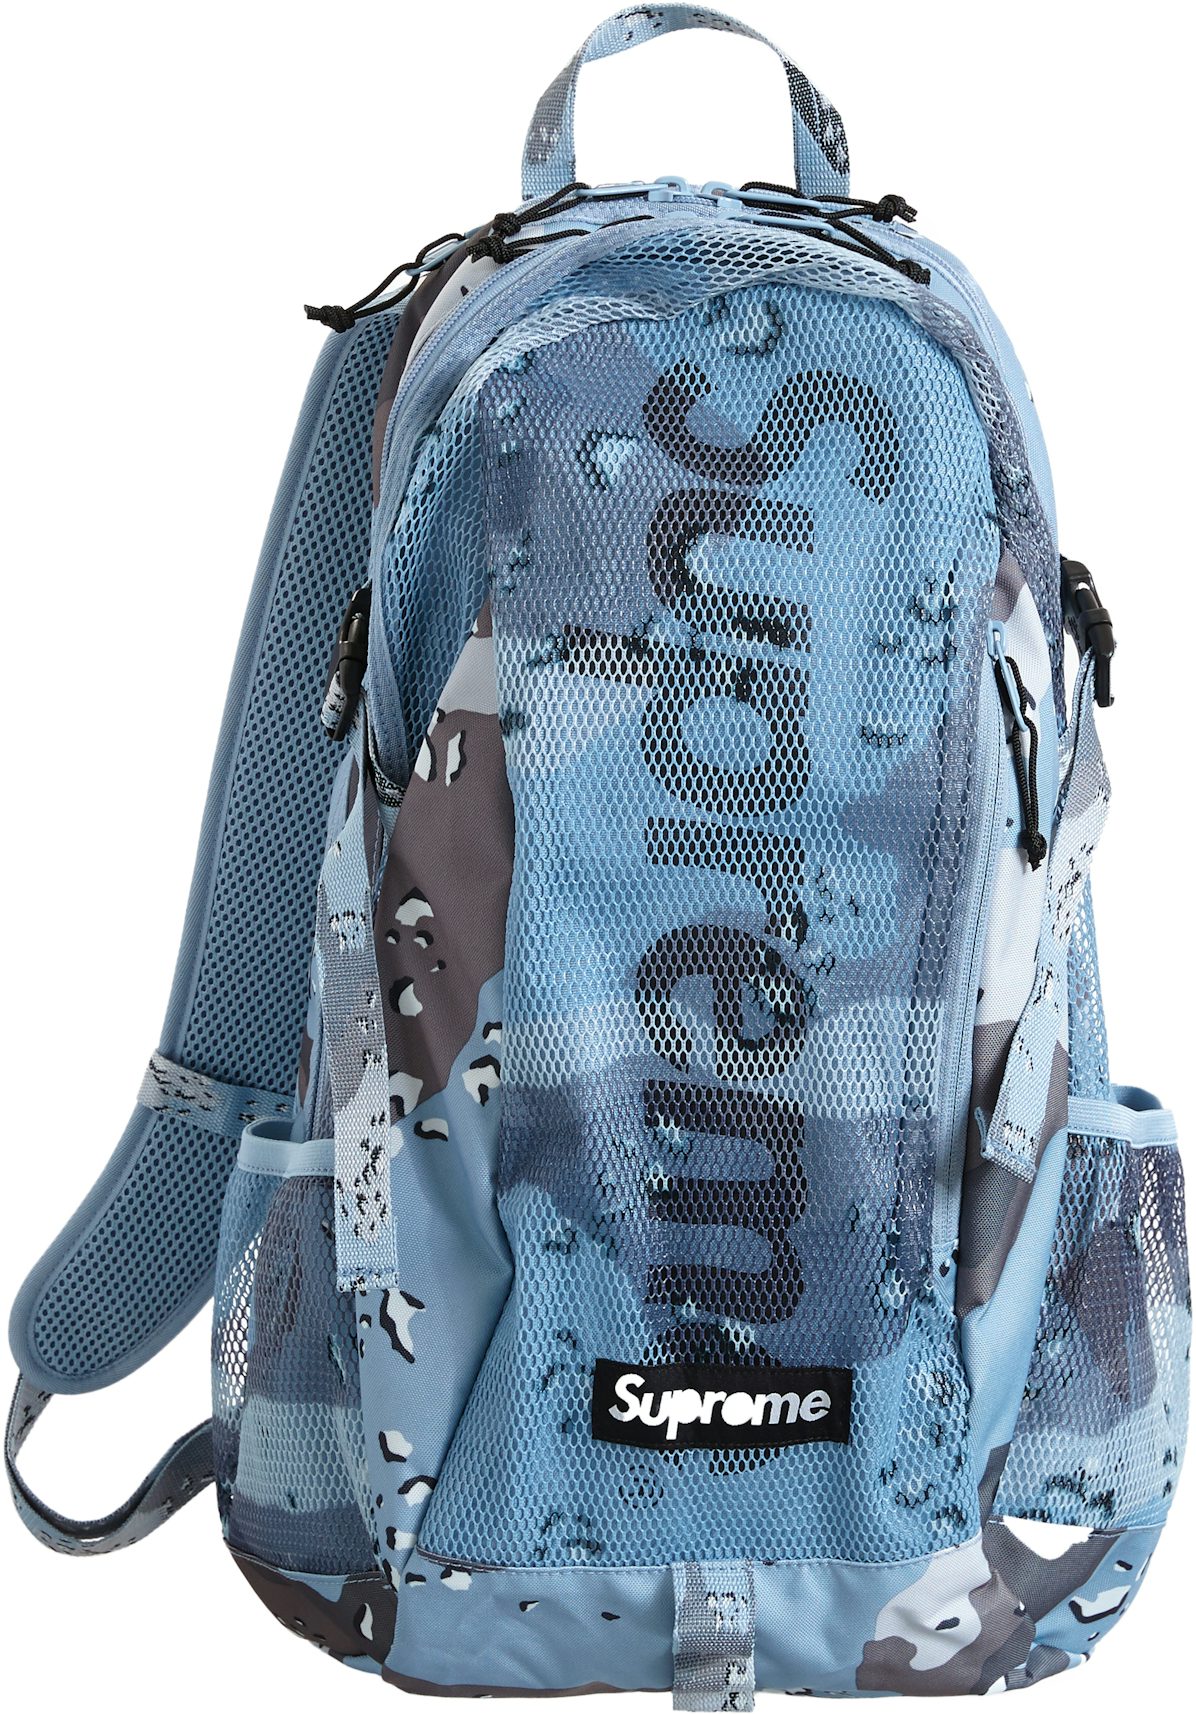 20 Supreme and bape ideas  bape, supreme clothing, supreme backpack